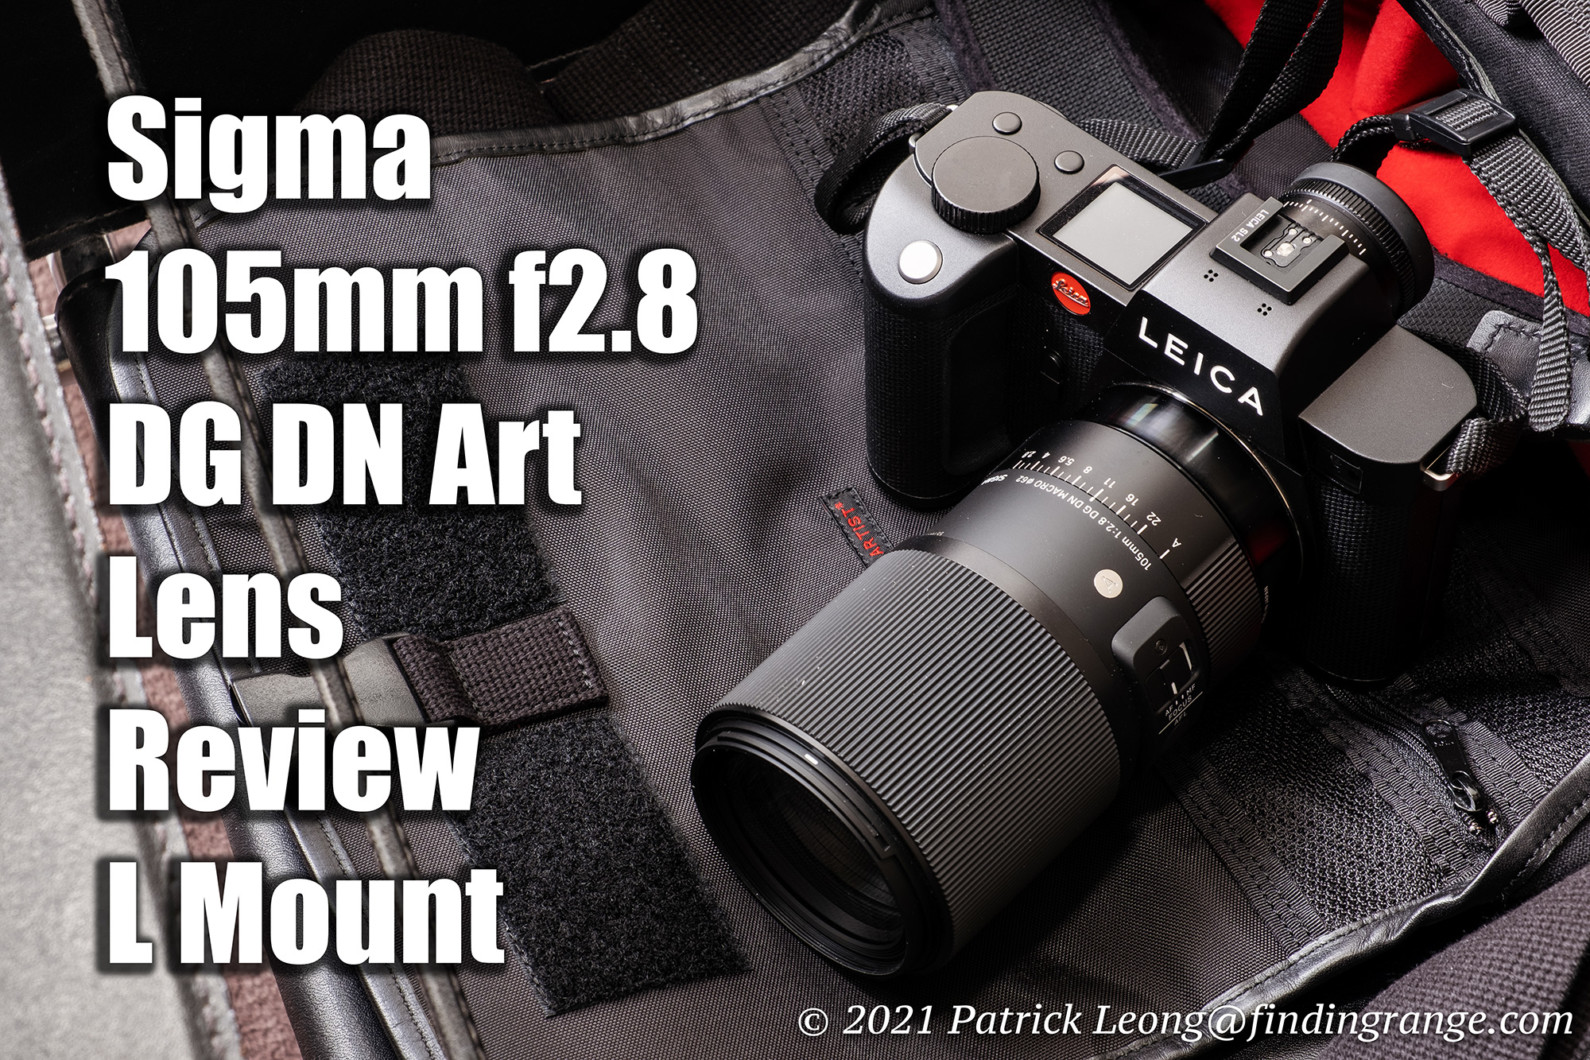 Sigma 105mm f2.8 DG DN Art Lens Review L Mount Finding Range